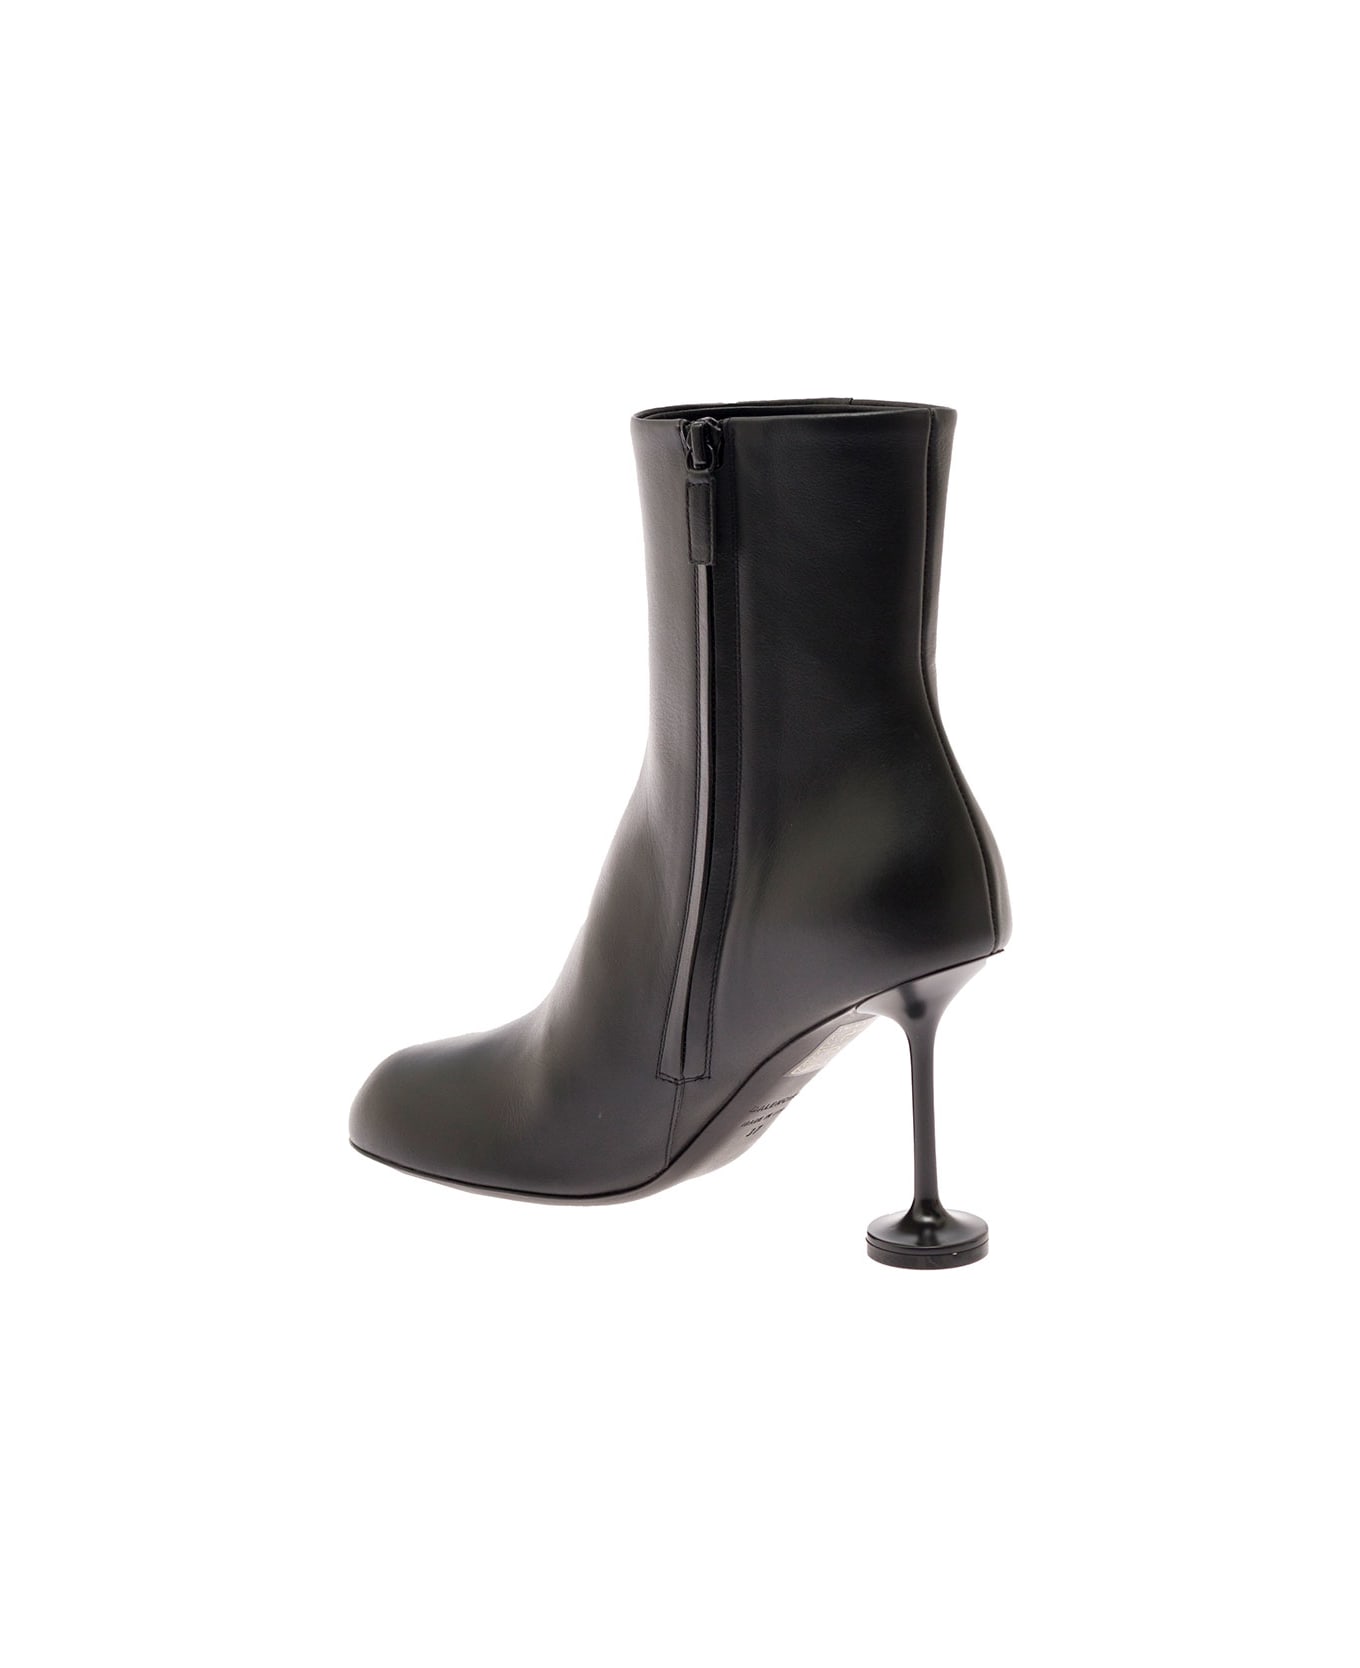 Balenciaga Black Lady Booties In Leather With 90 Mm Champagne Heel Balenciaga Woman - Black